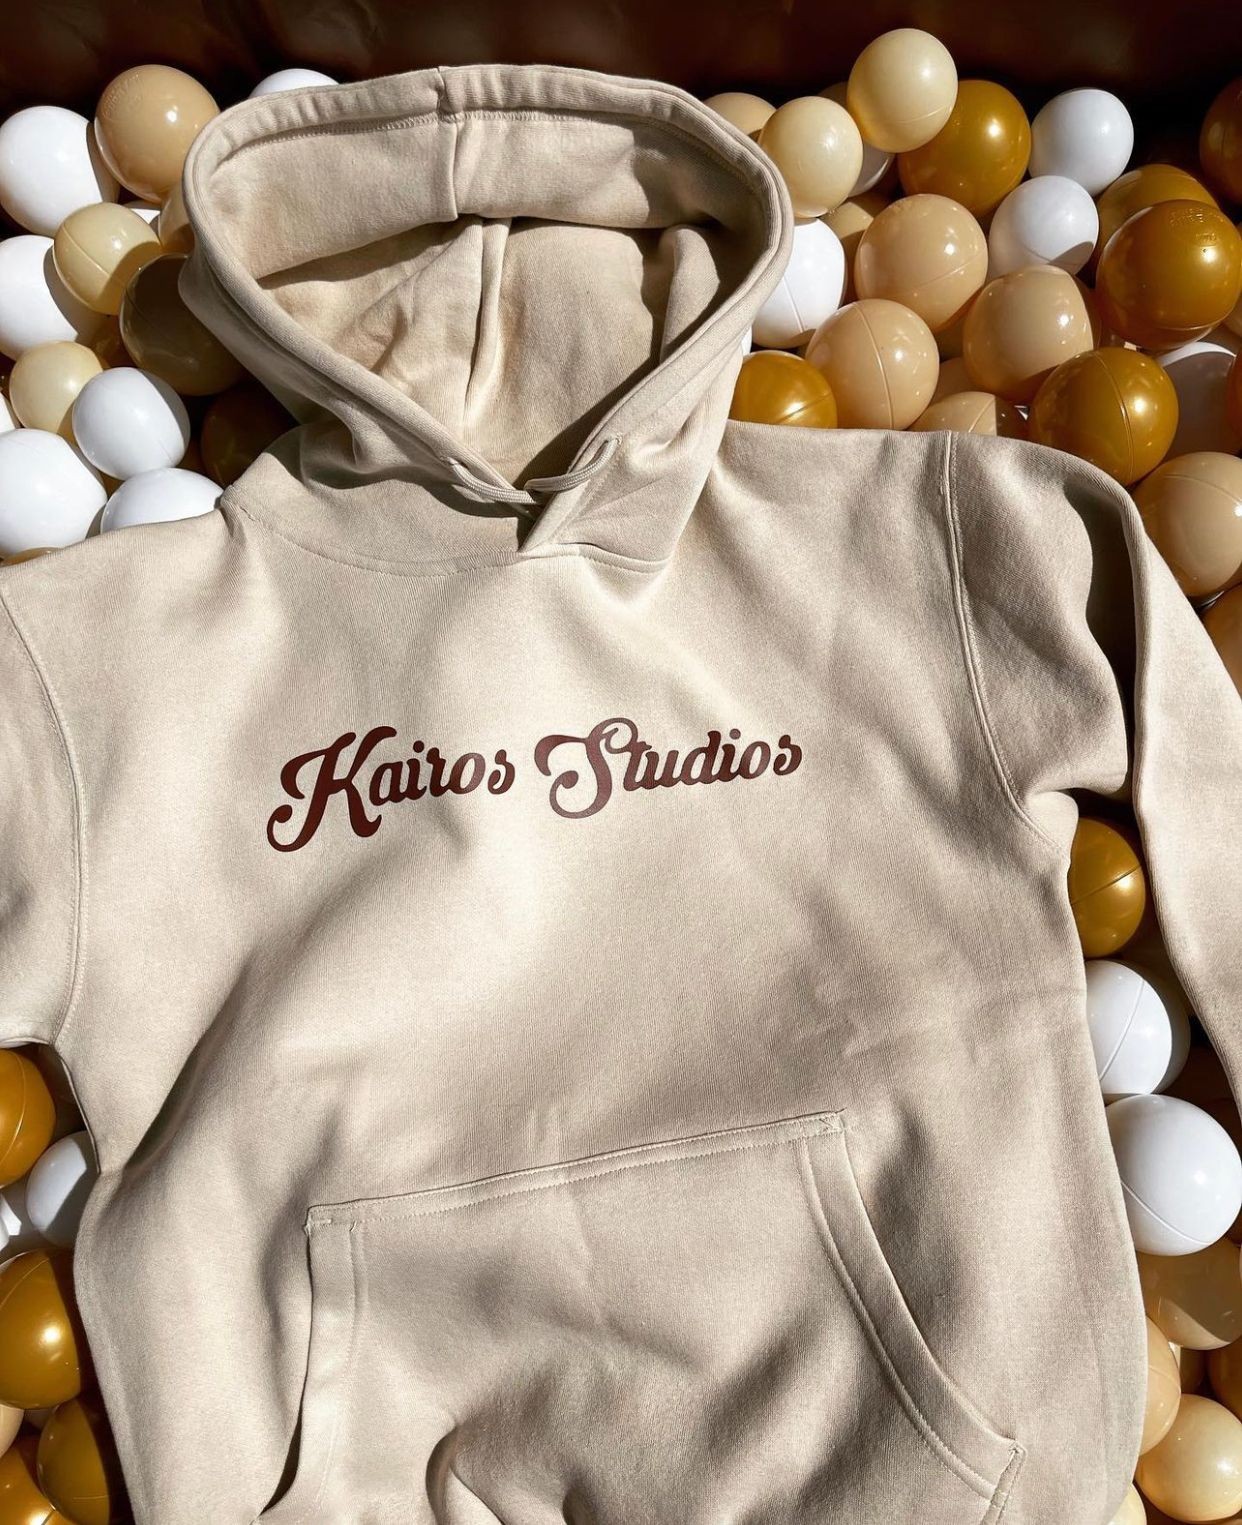 kairos studios cream hoodie on gold balls